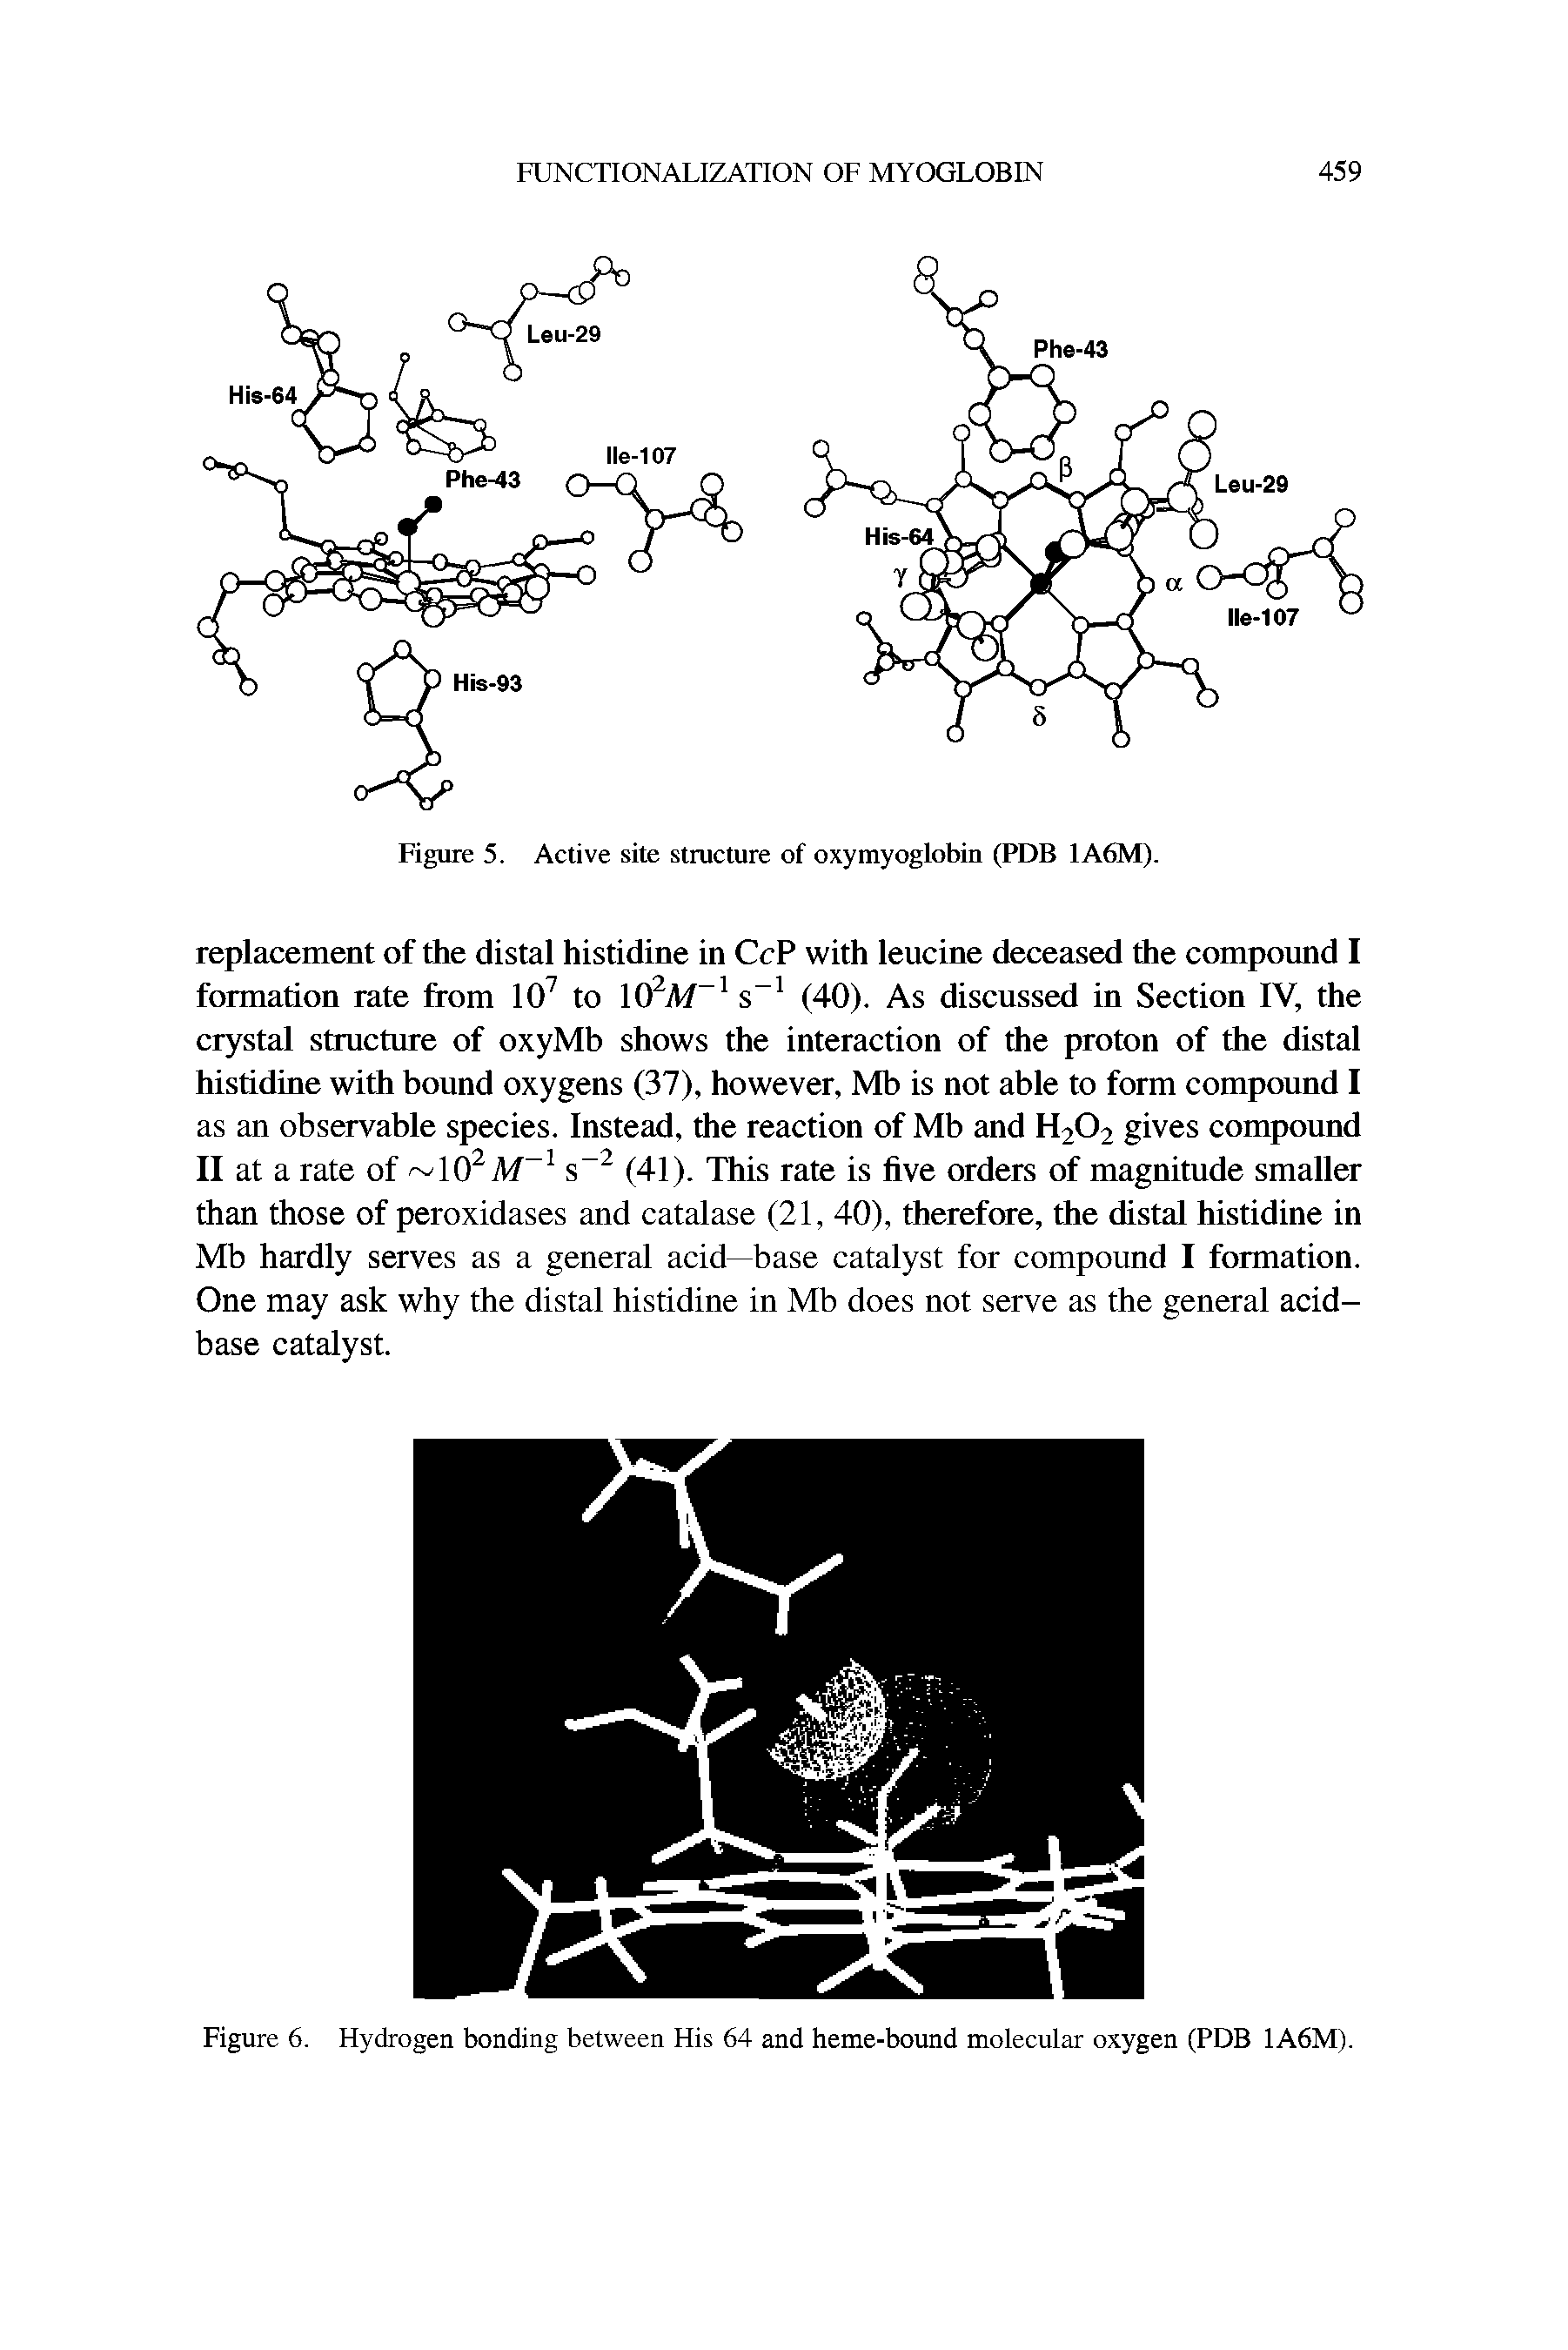 Figure 6. Hydrogen bonding between His 64 and heme-bound molecular oxygen (PDB 1A6M).